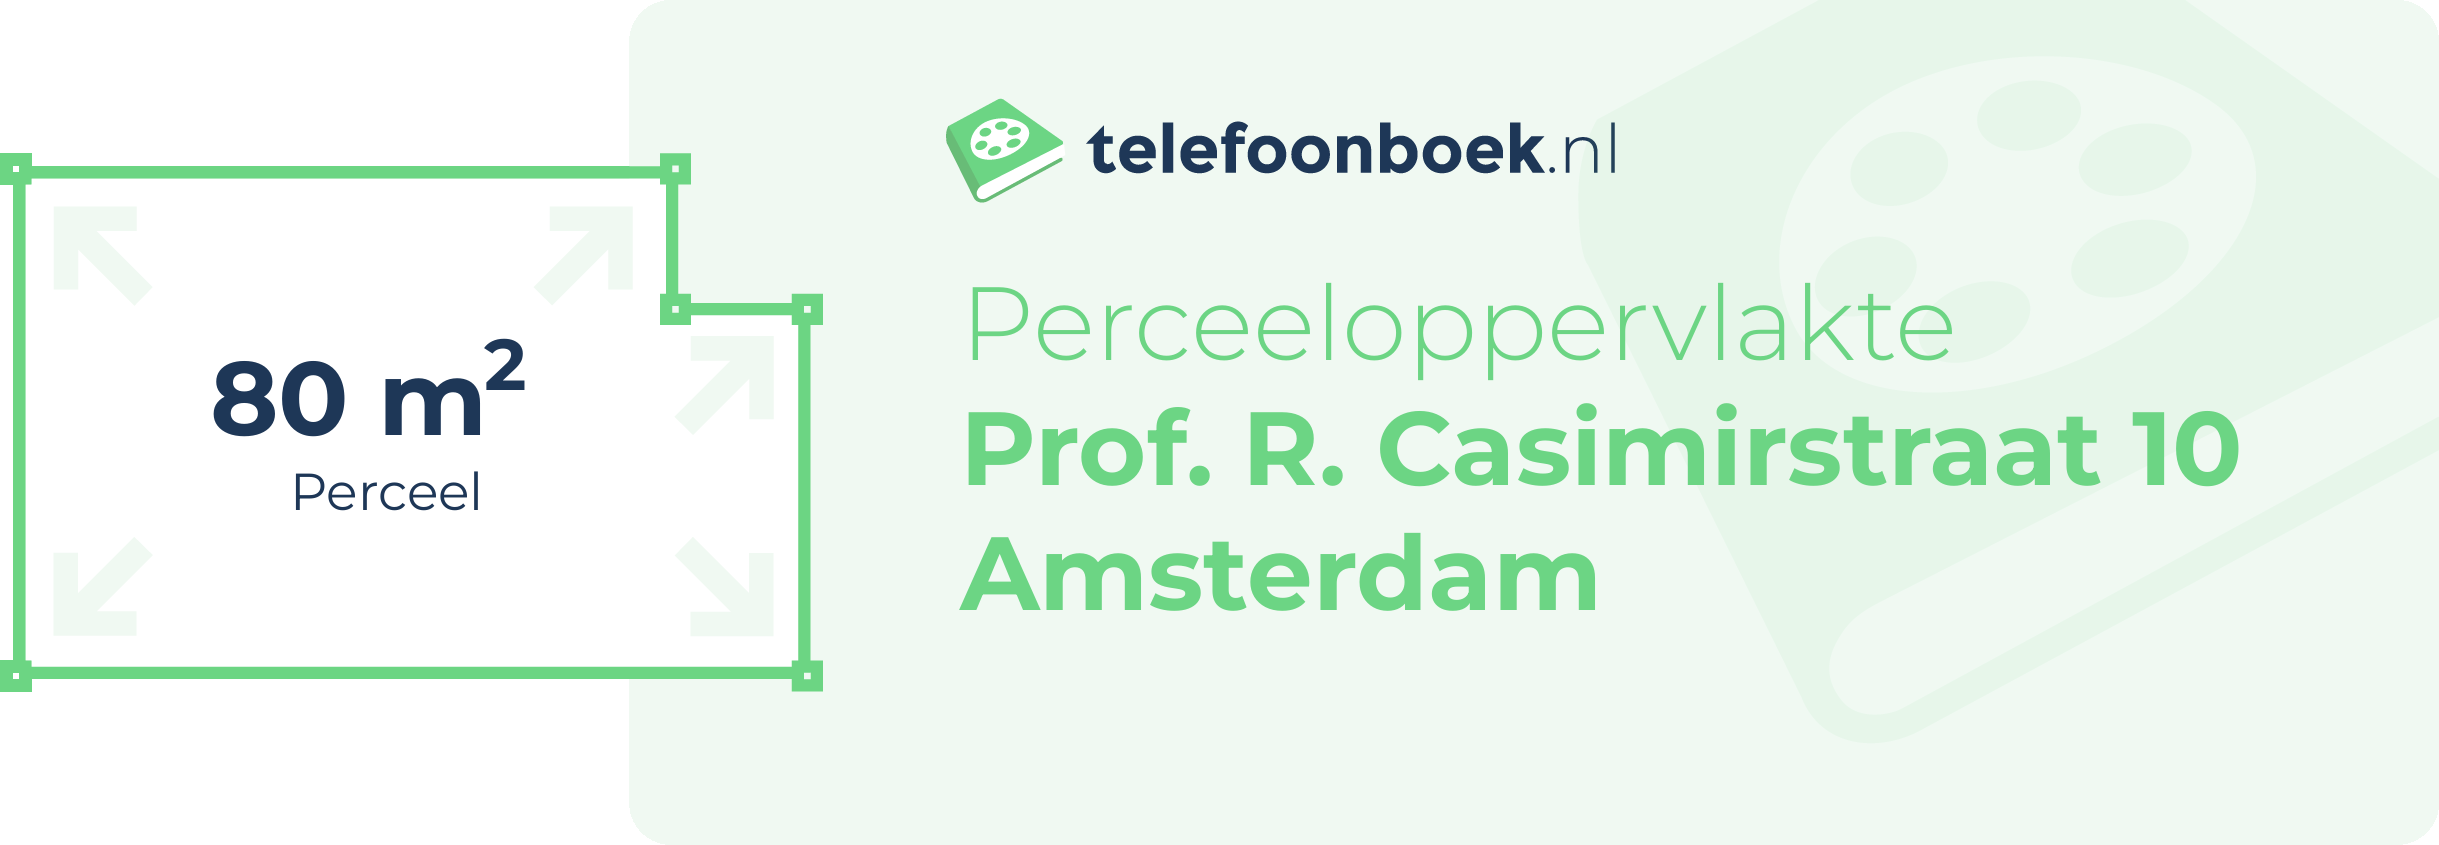 Perceeloppervlakte Prof. R. Casimirstraat 10 Amsterdam